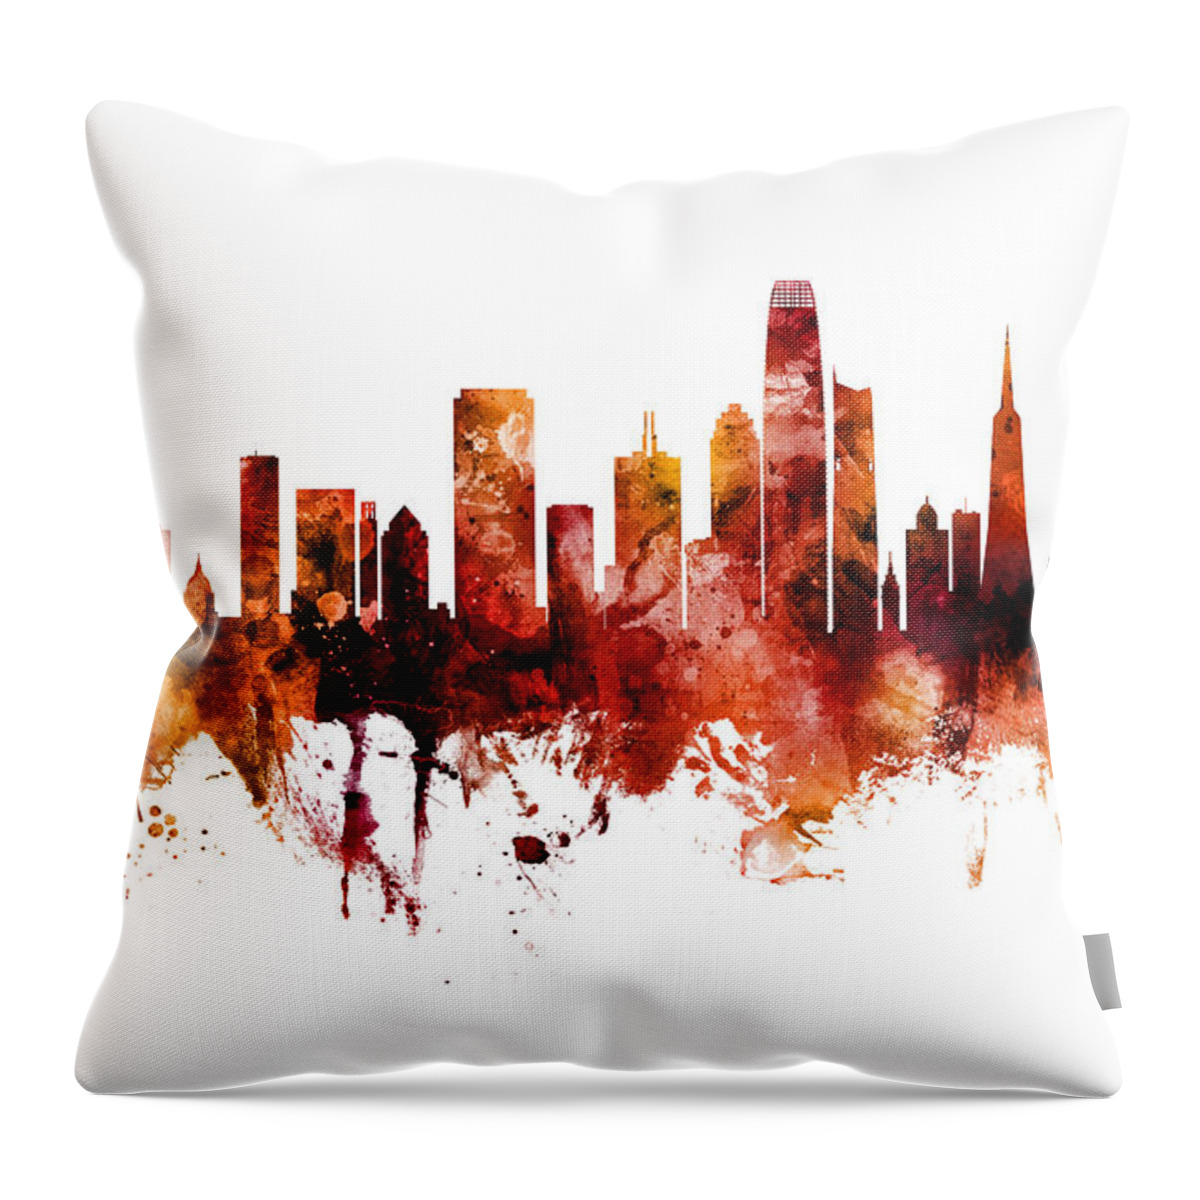 San Francisco Throw Pillow featuring the digital art San Francisco City Skyline by Michael Tompsett